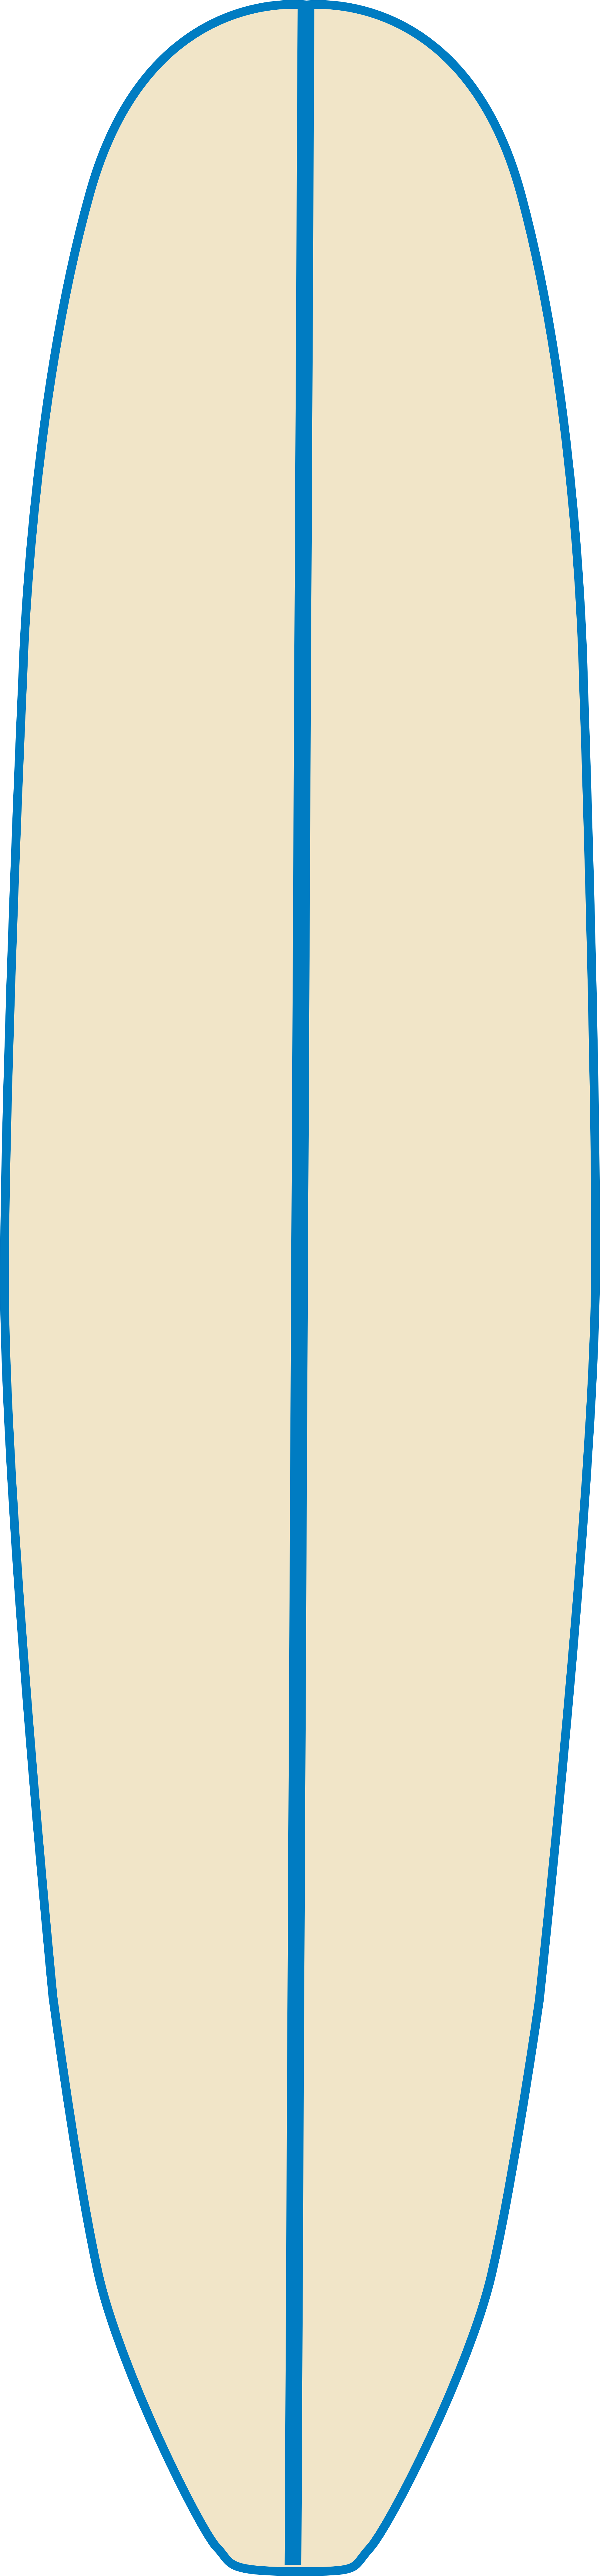 Surf Board Vector